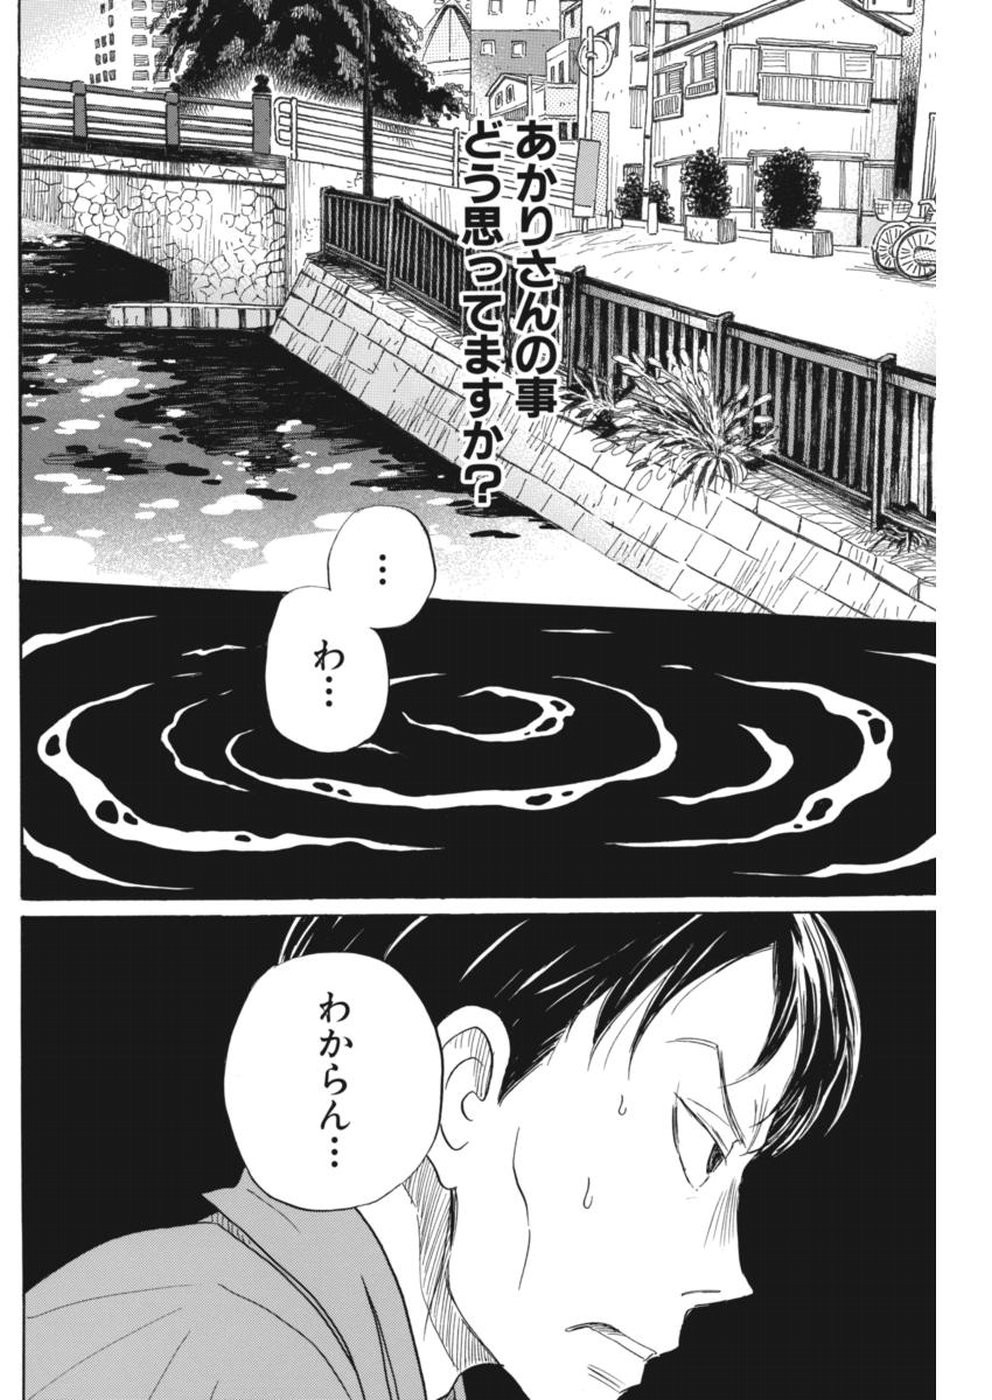 3 Gatsu no Lion - Chapter 145 - Page 2